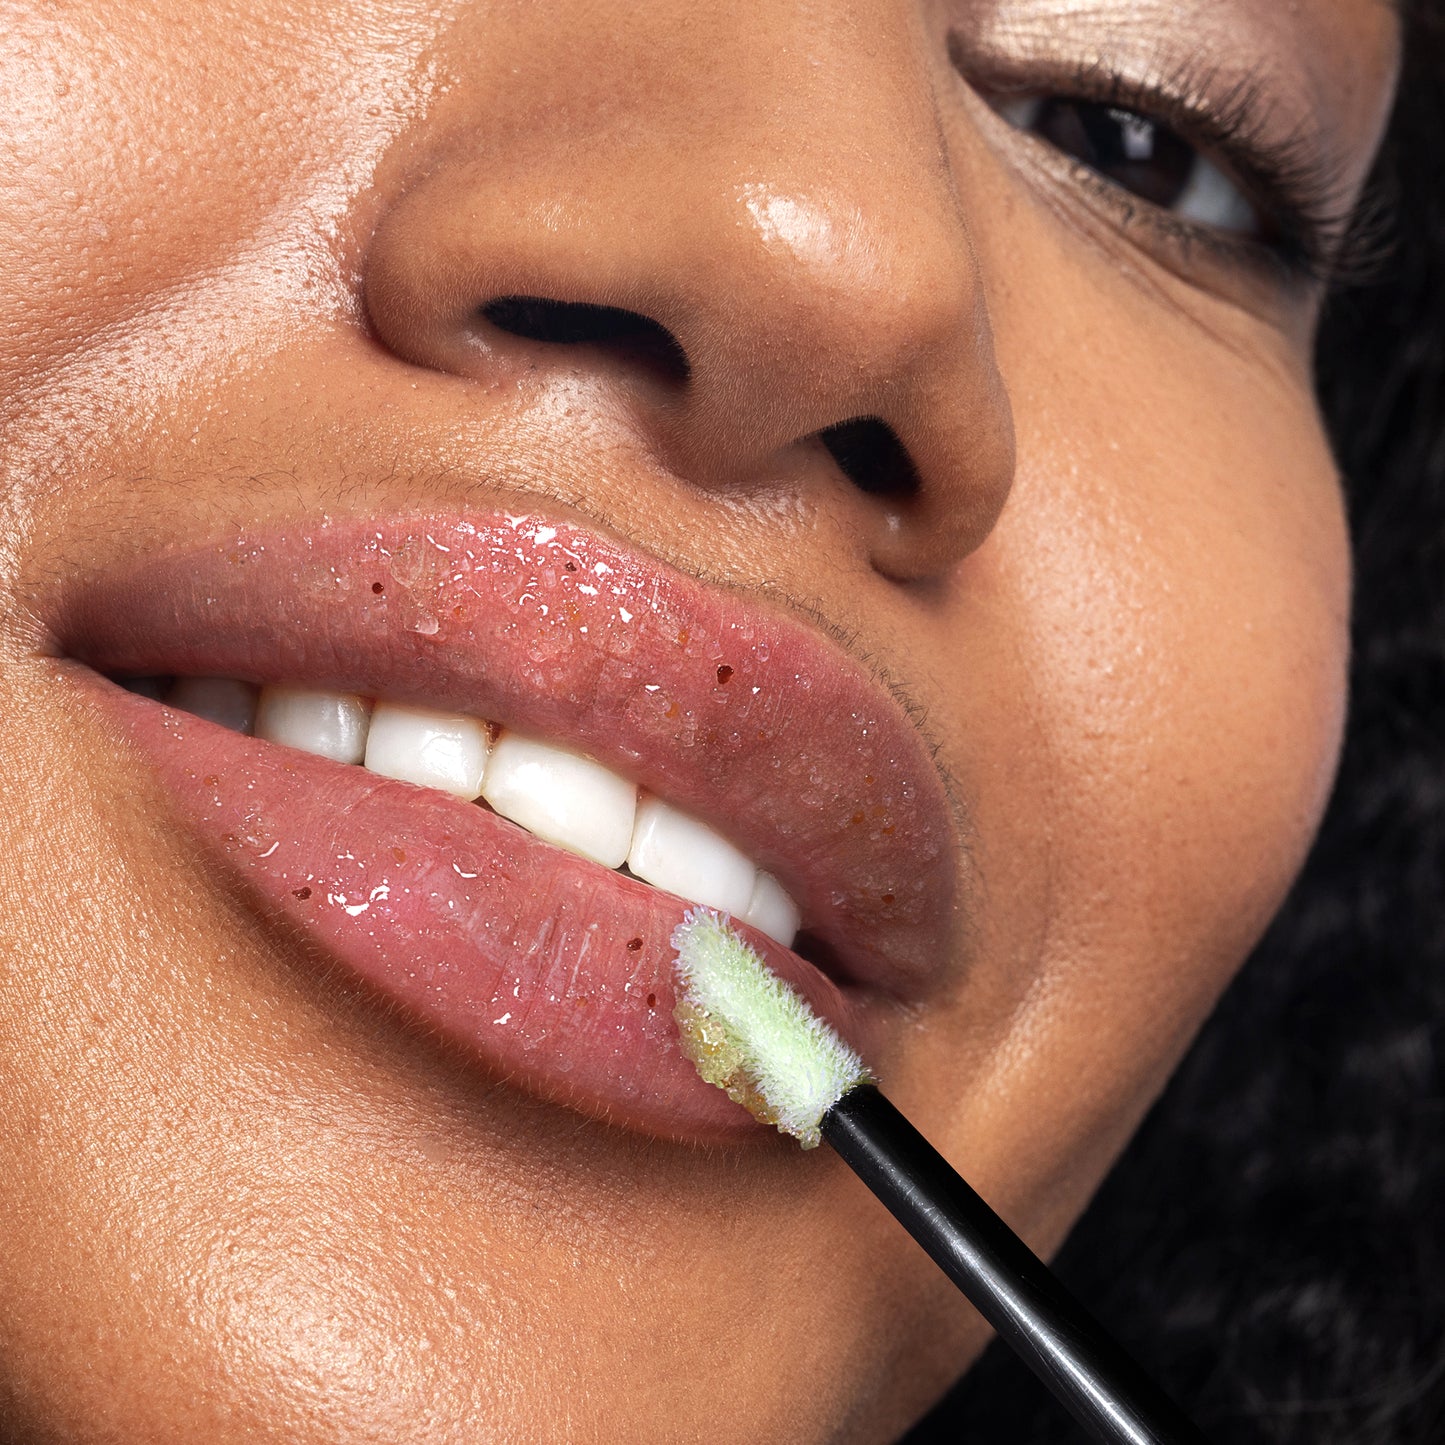 Freeman Beauty Lip Dip Exfoliating Kiwi Lip Scrub